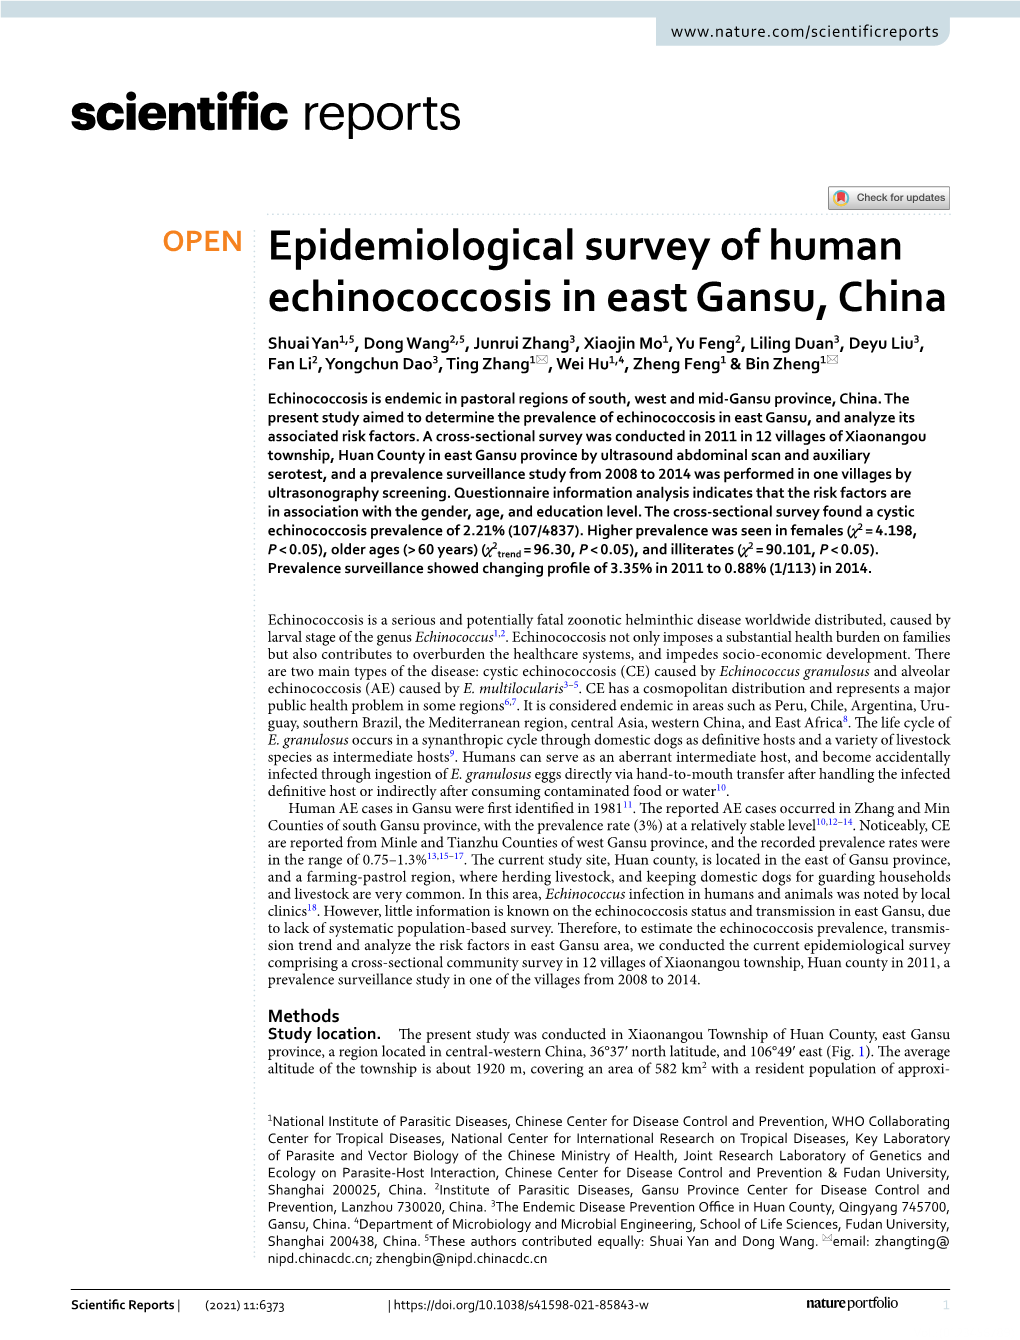 Epidemiological Survey of Human Echinococcosis in East Gansu, China